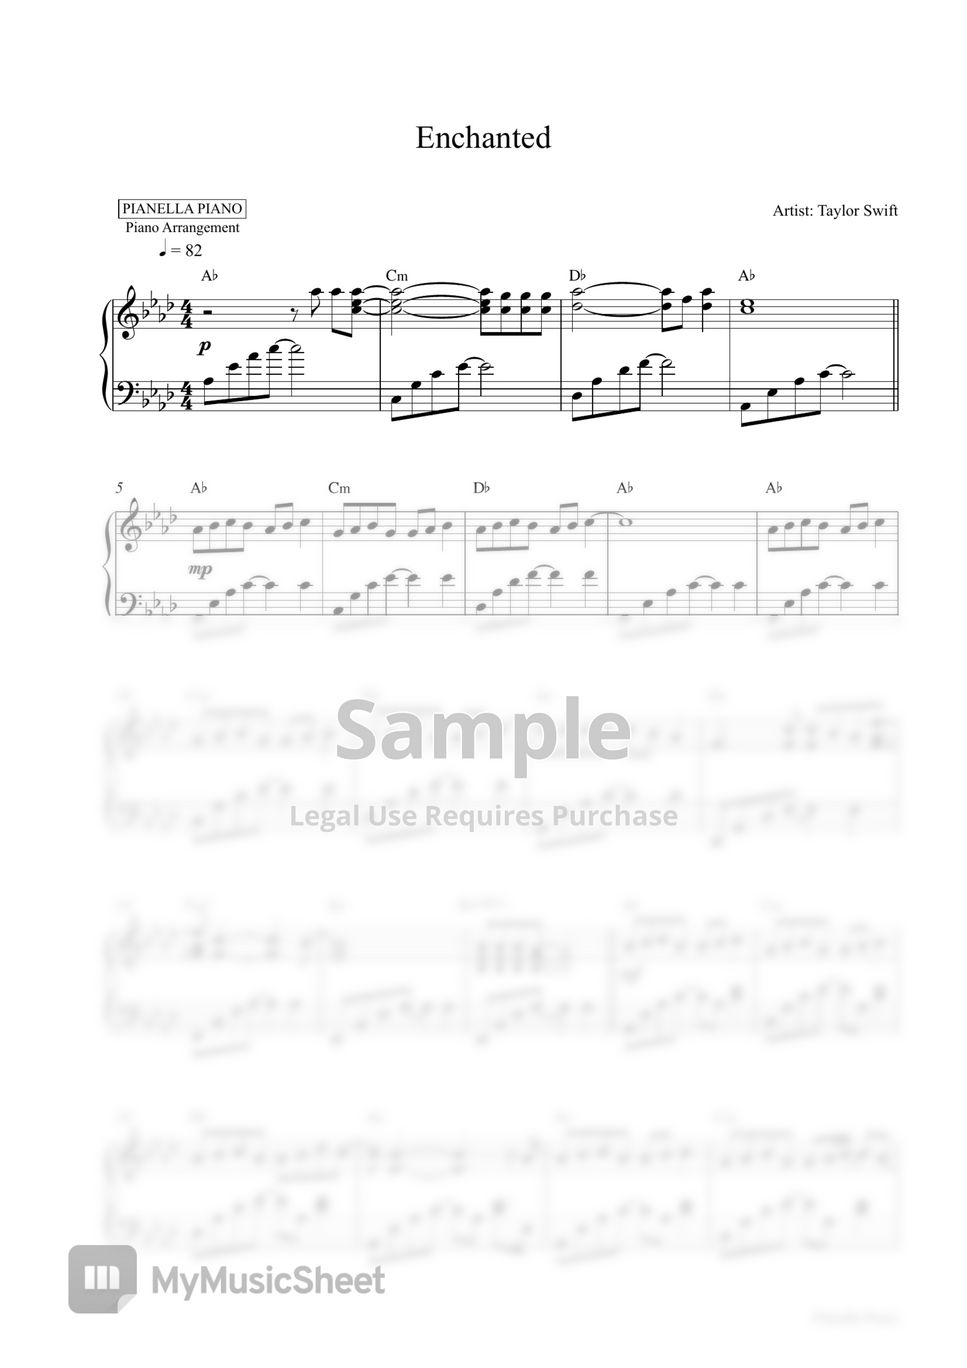 Taylor Swift - Enchanted (Piano Sheet) by Pianella Piano